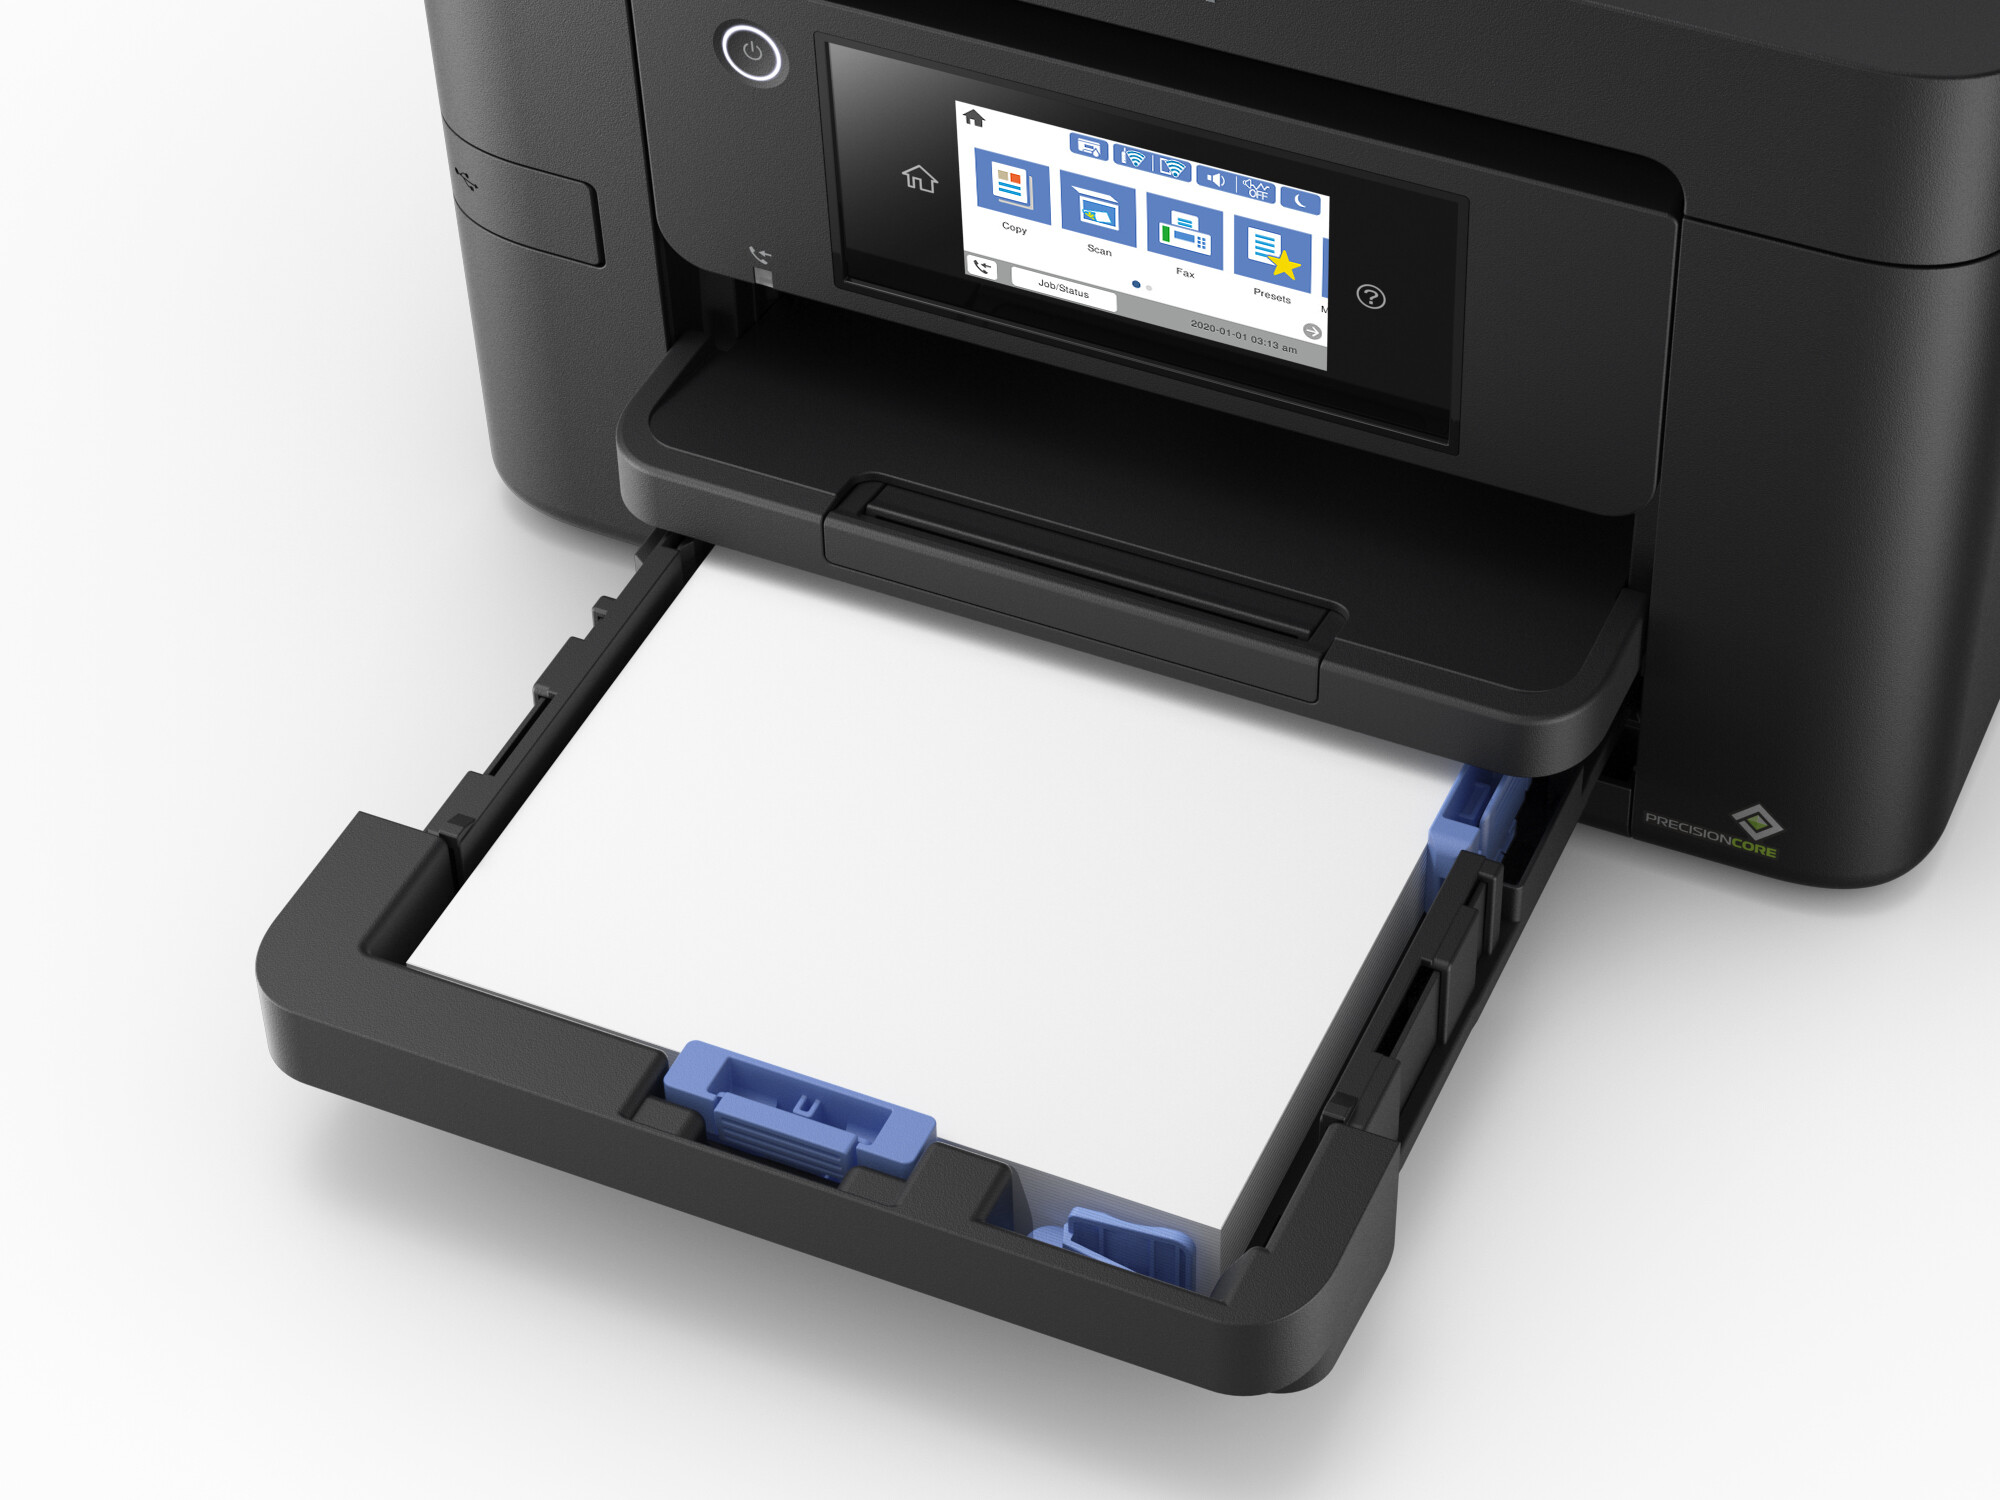 Epson-WorkForce-Pro-WF-4820DWF-Printer